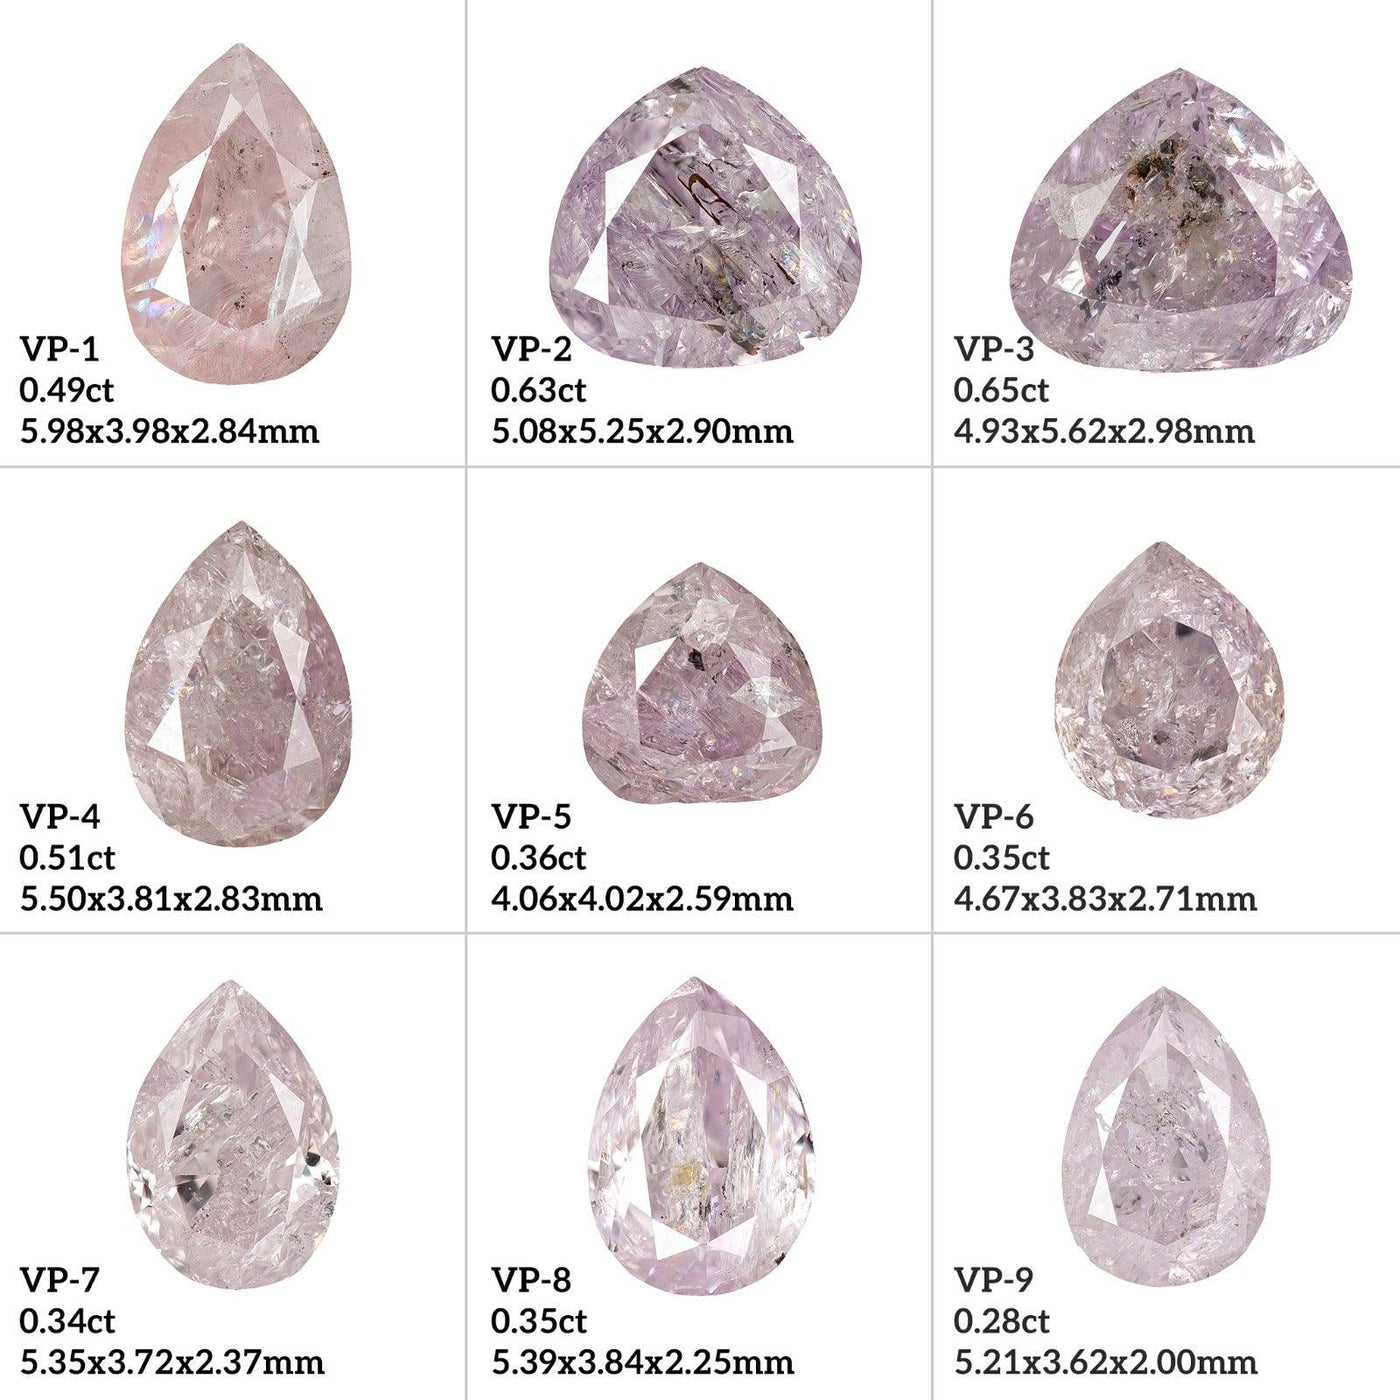 VP8 - Vivid pink pear diamond